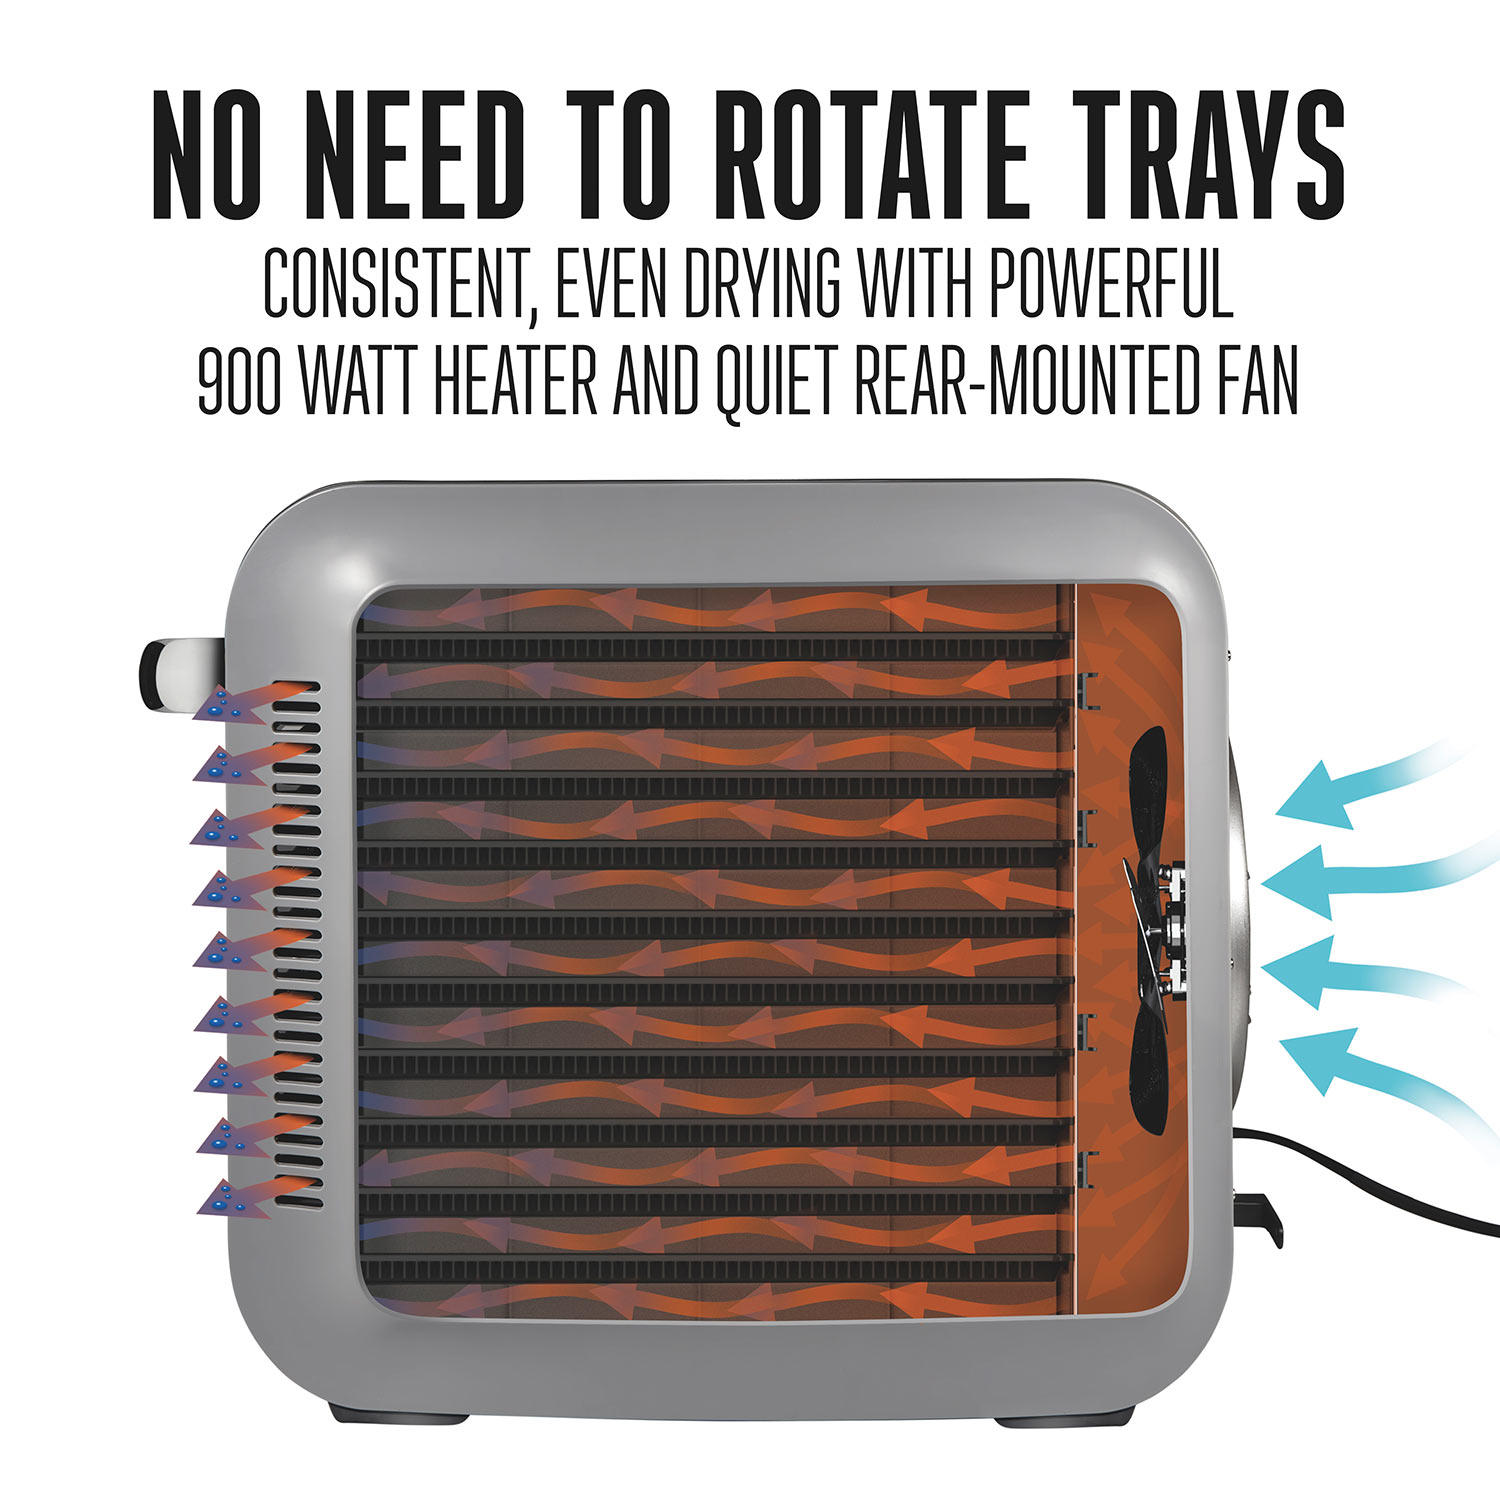 10 Tray Digital Food Dehydrator with Oven-style Door